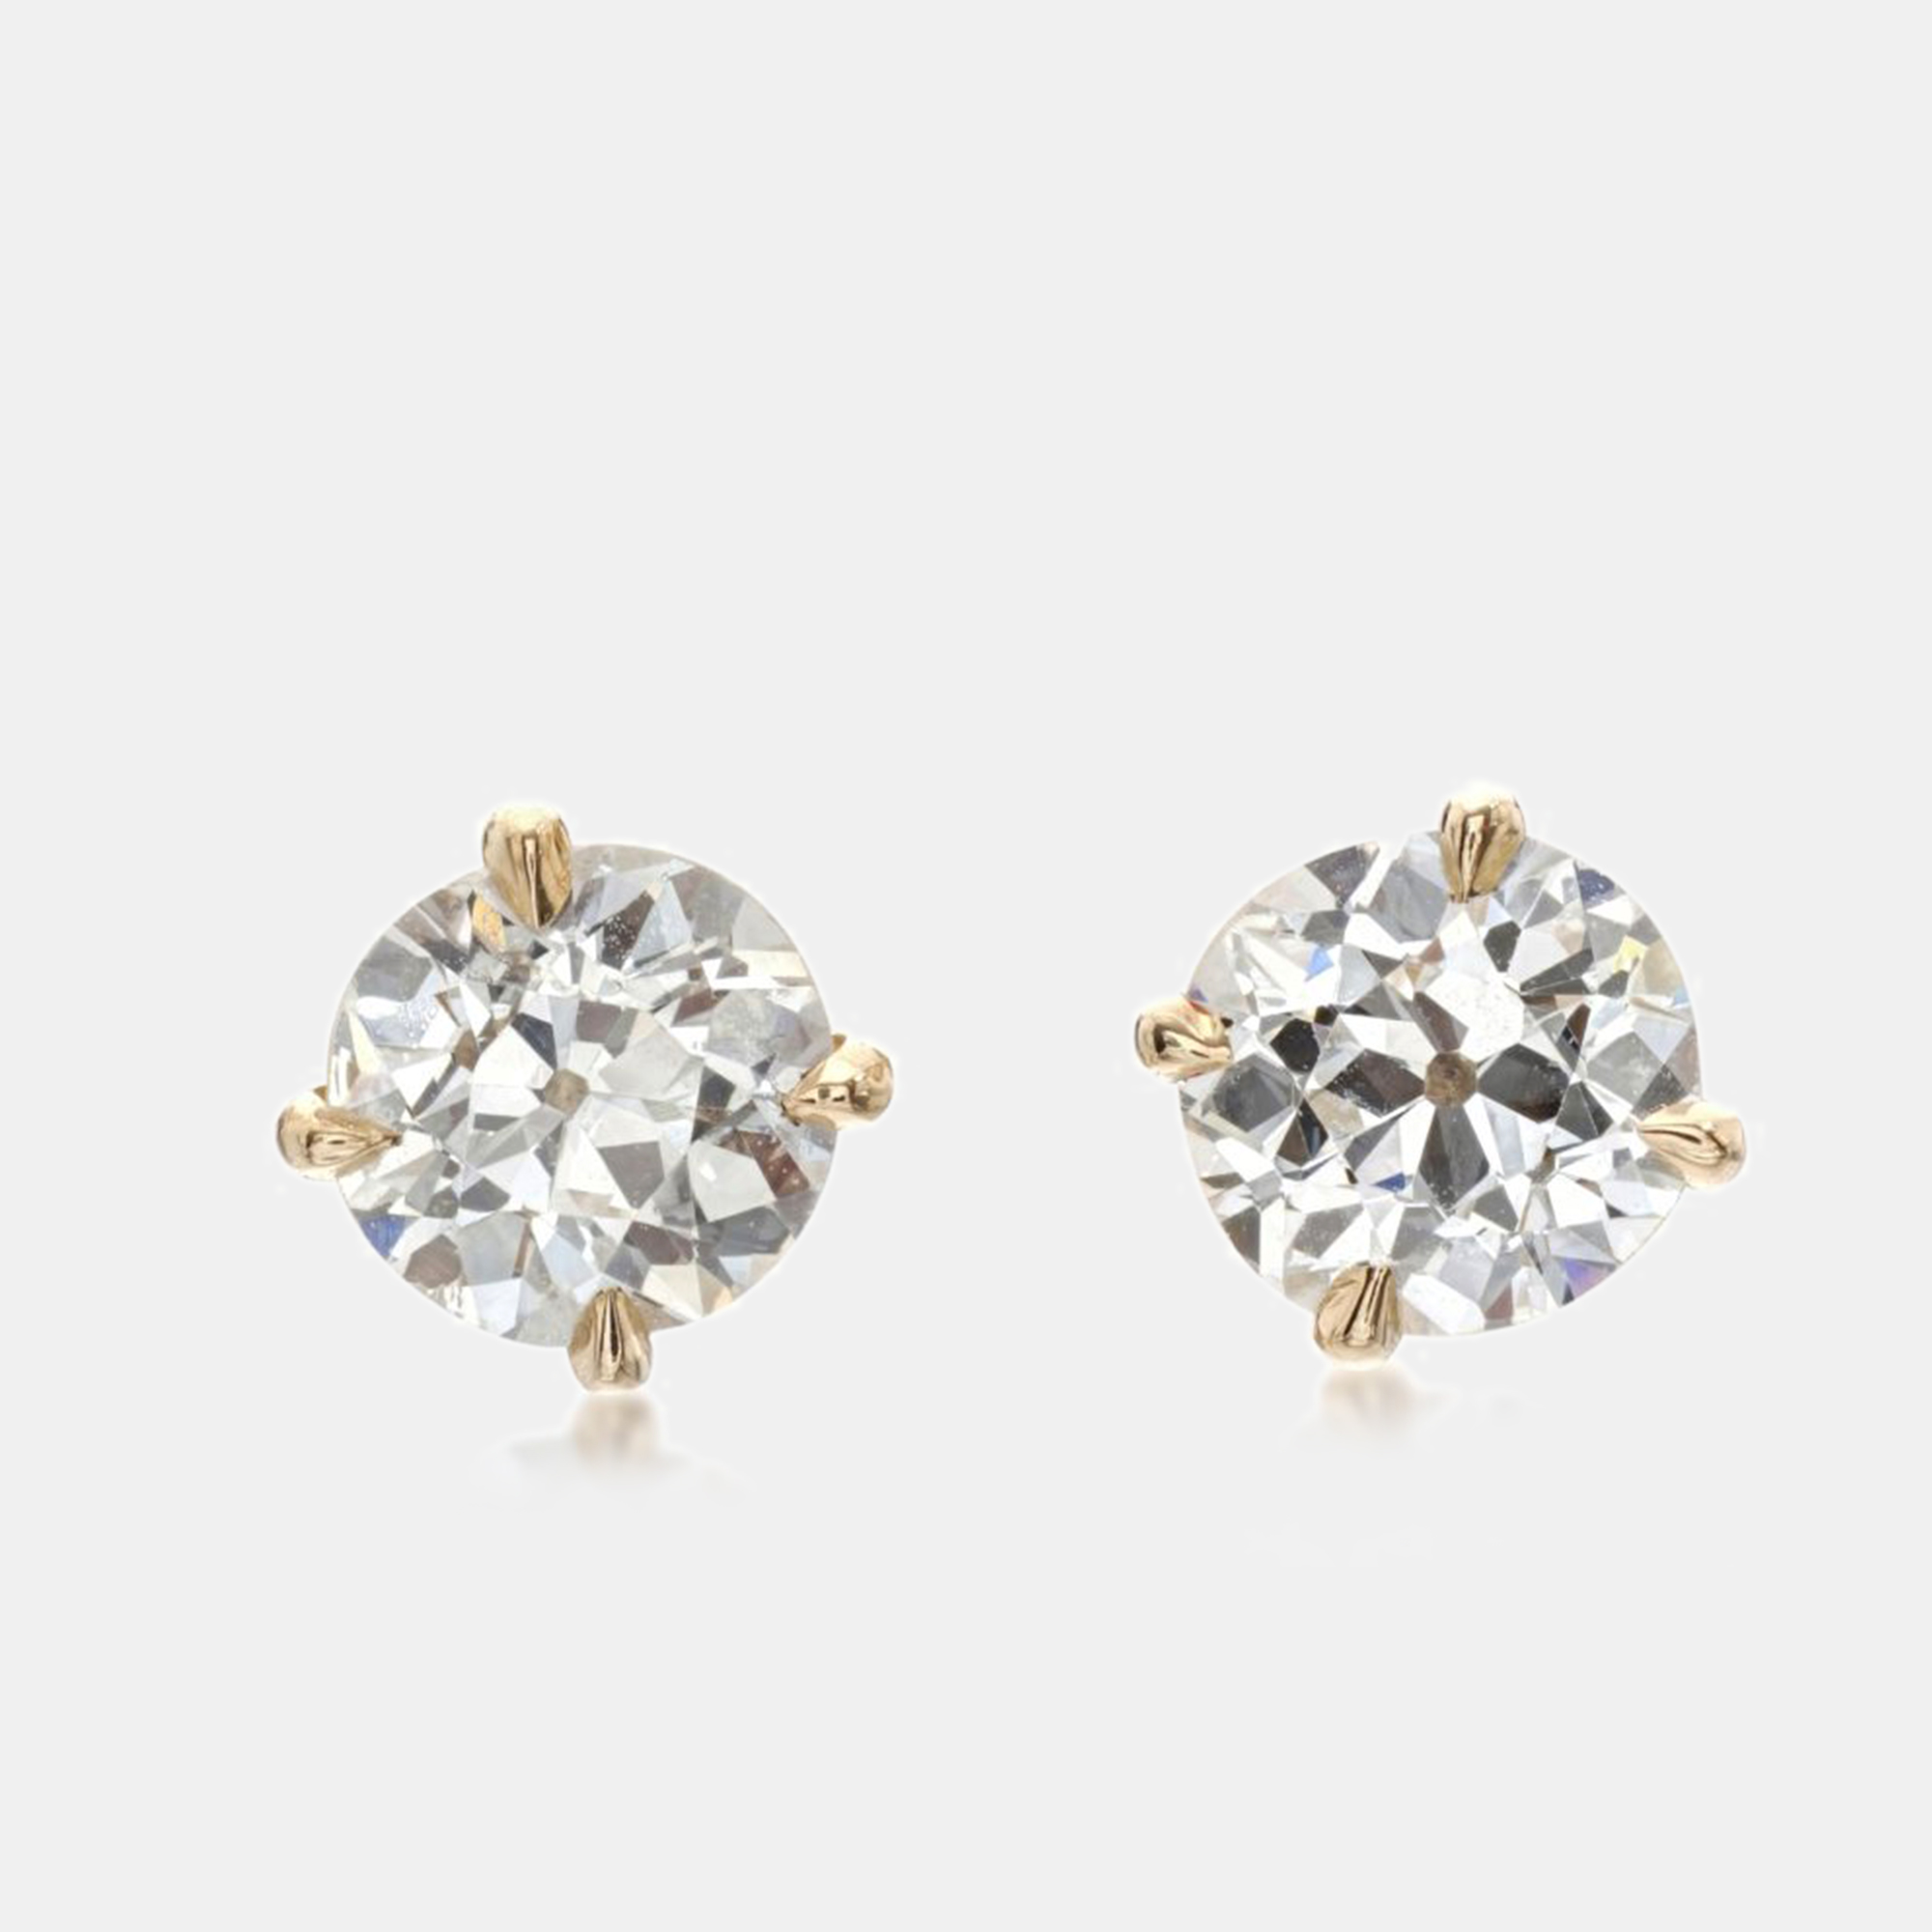 The diamond edit 18k yellow gold diamonds 1.40 ct. stud earrings